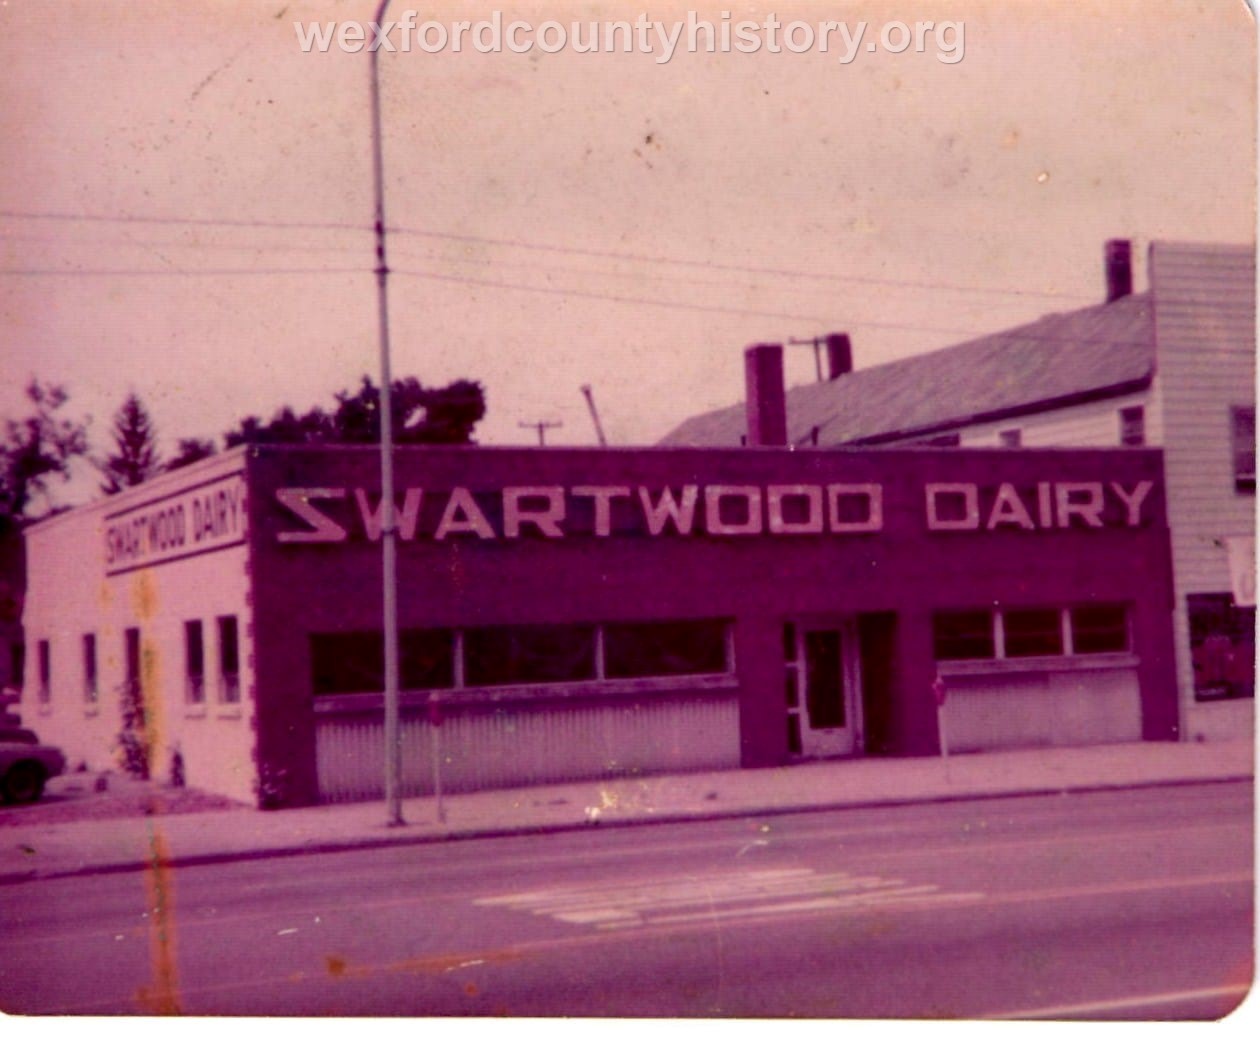 Swartwood Dairy